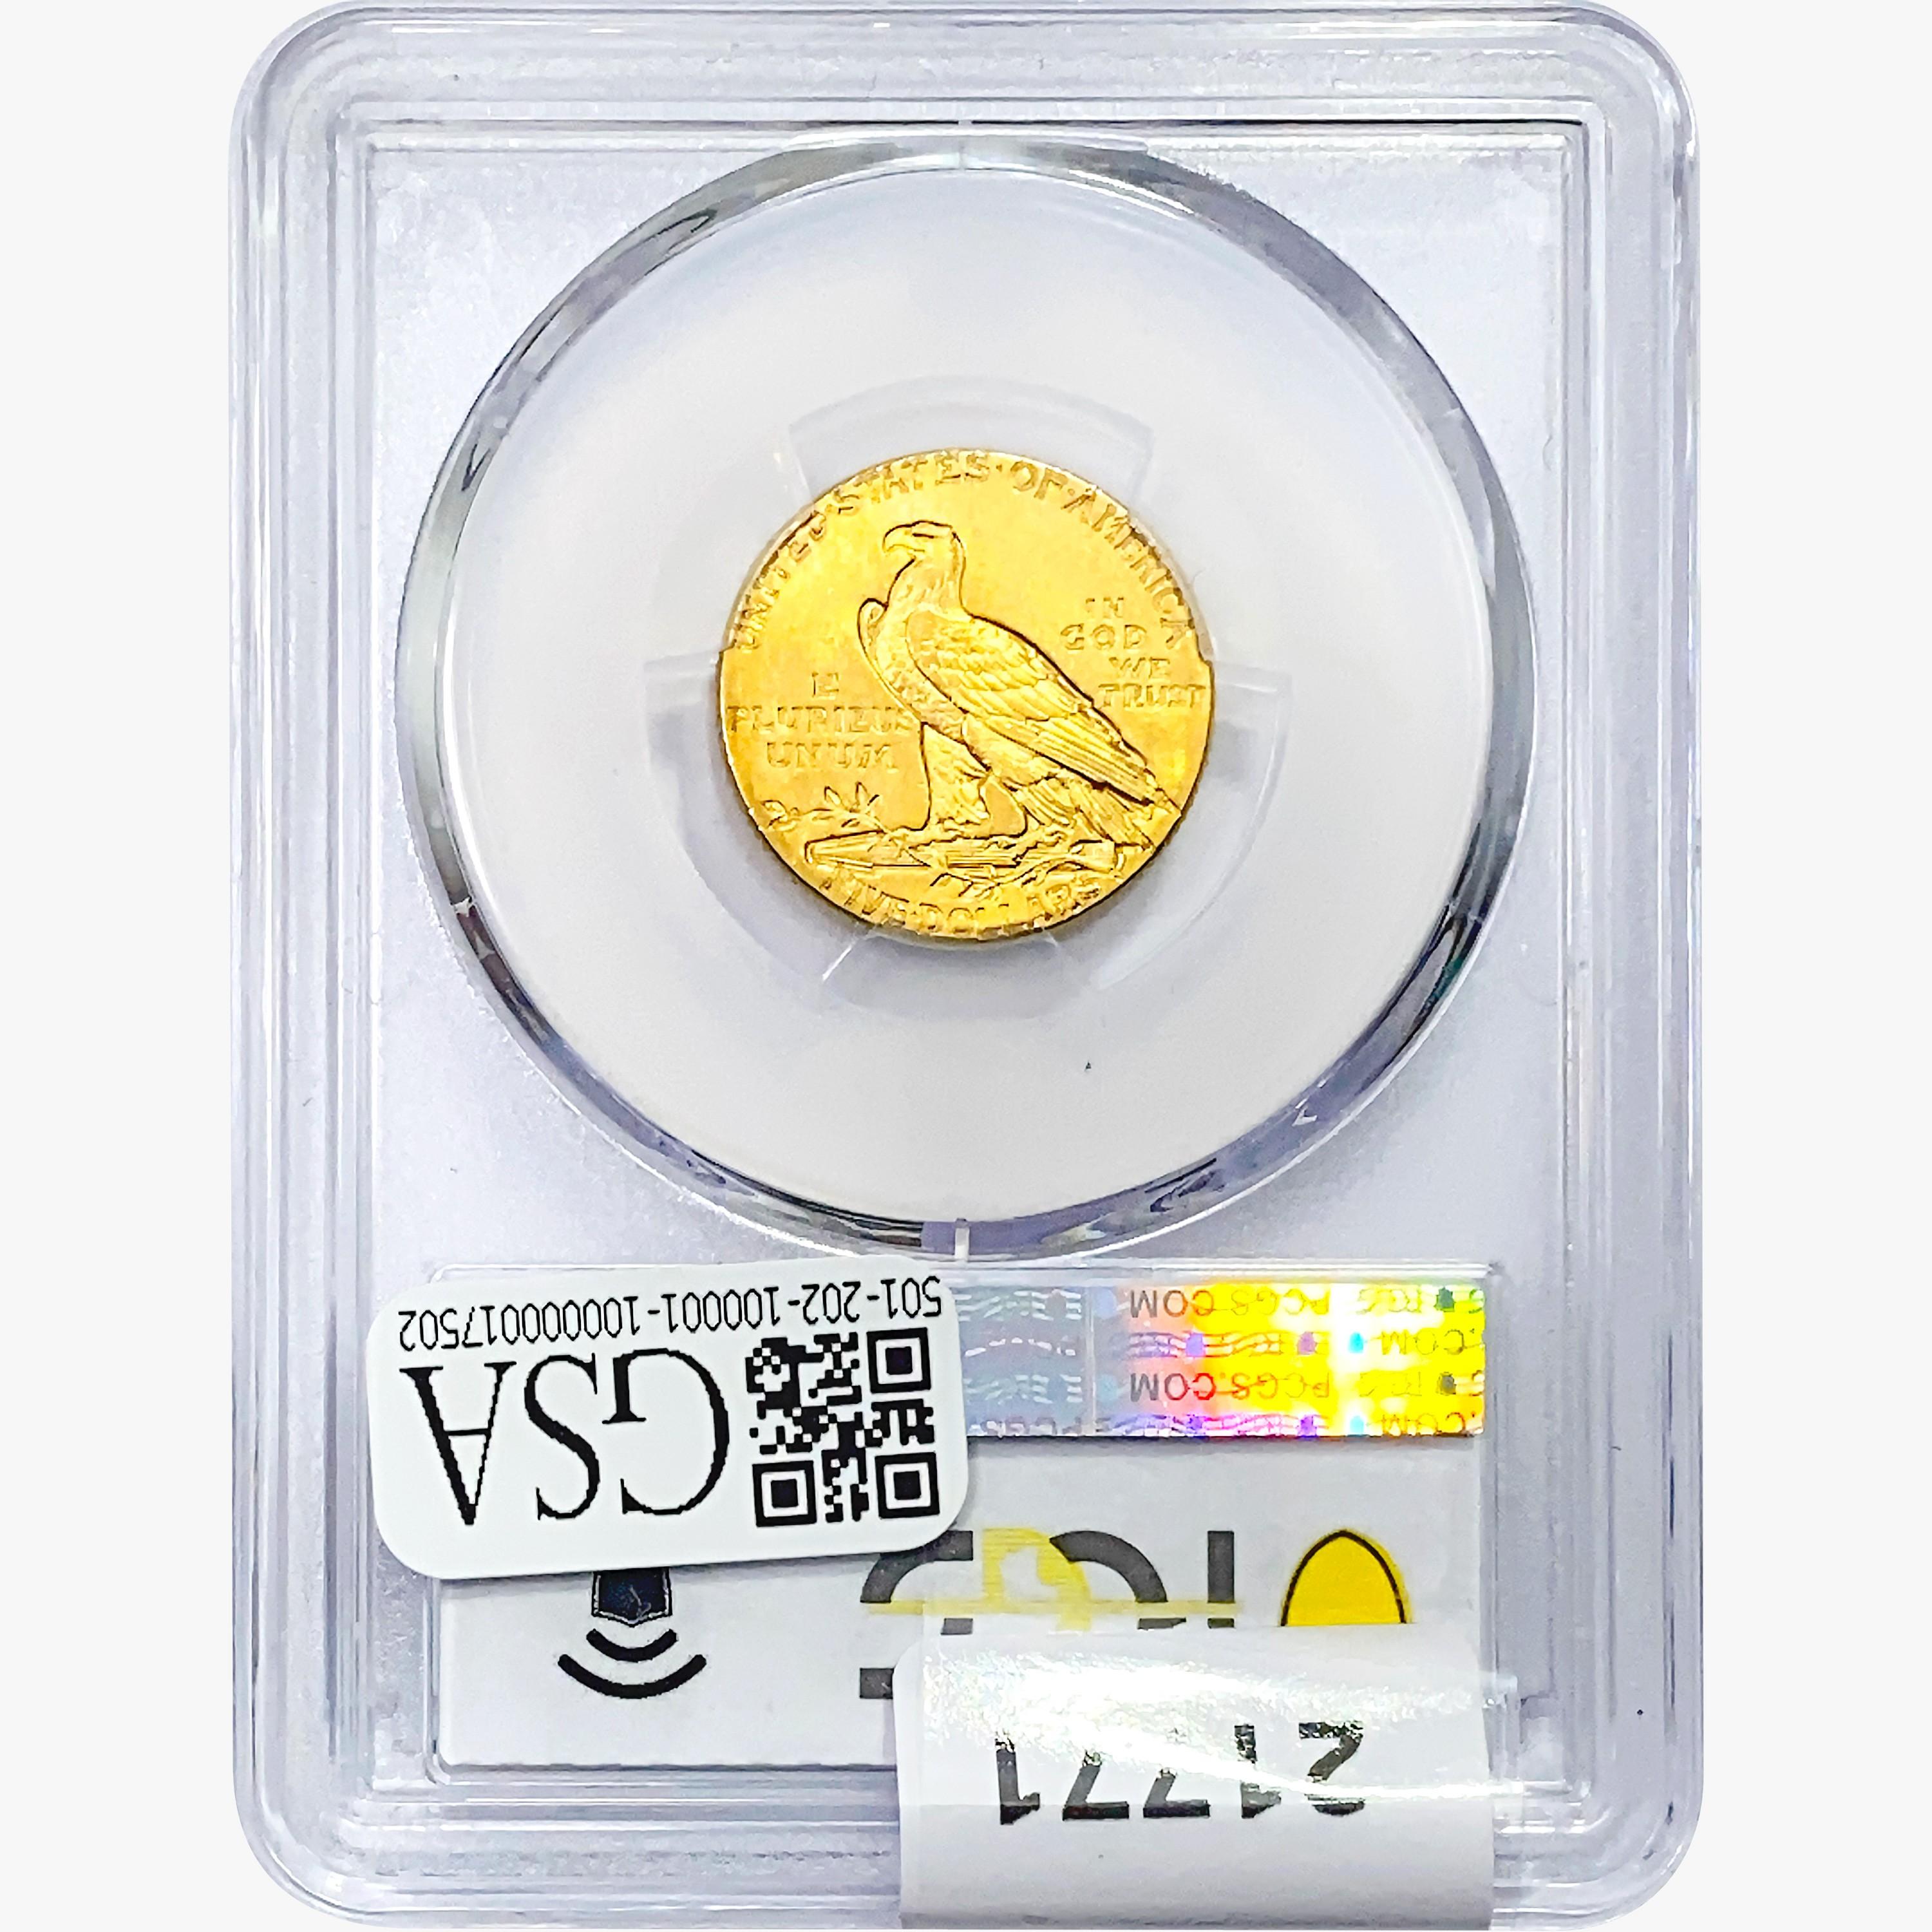 1912 $5 Gold Half Eagle PCGS MS62